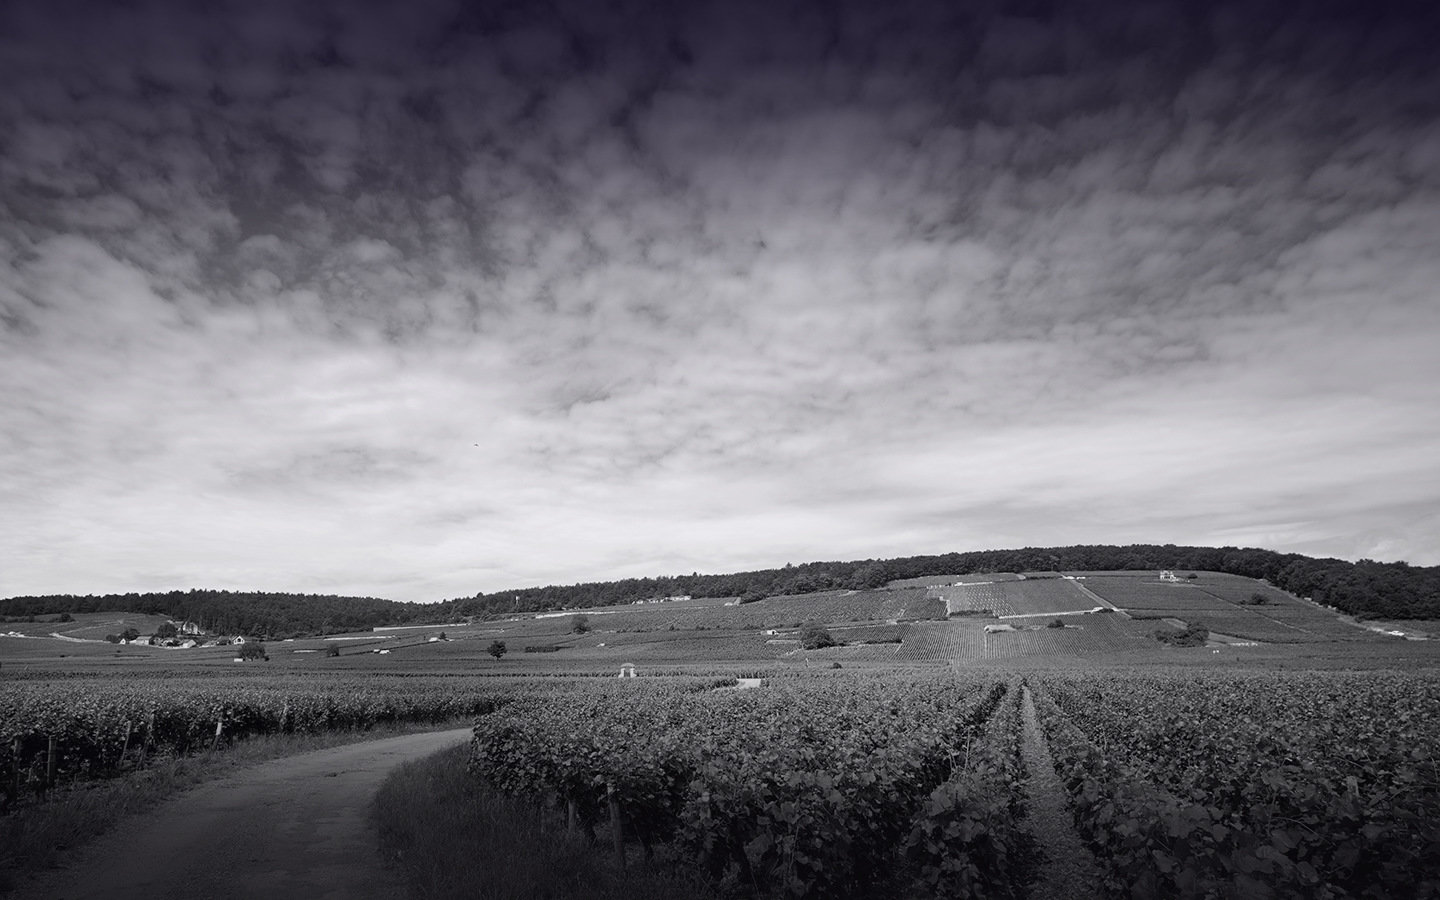 The Domaine Magnien vineyard